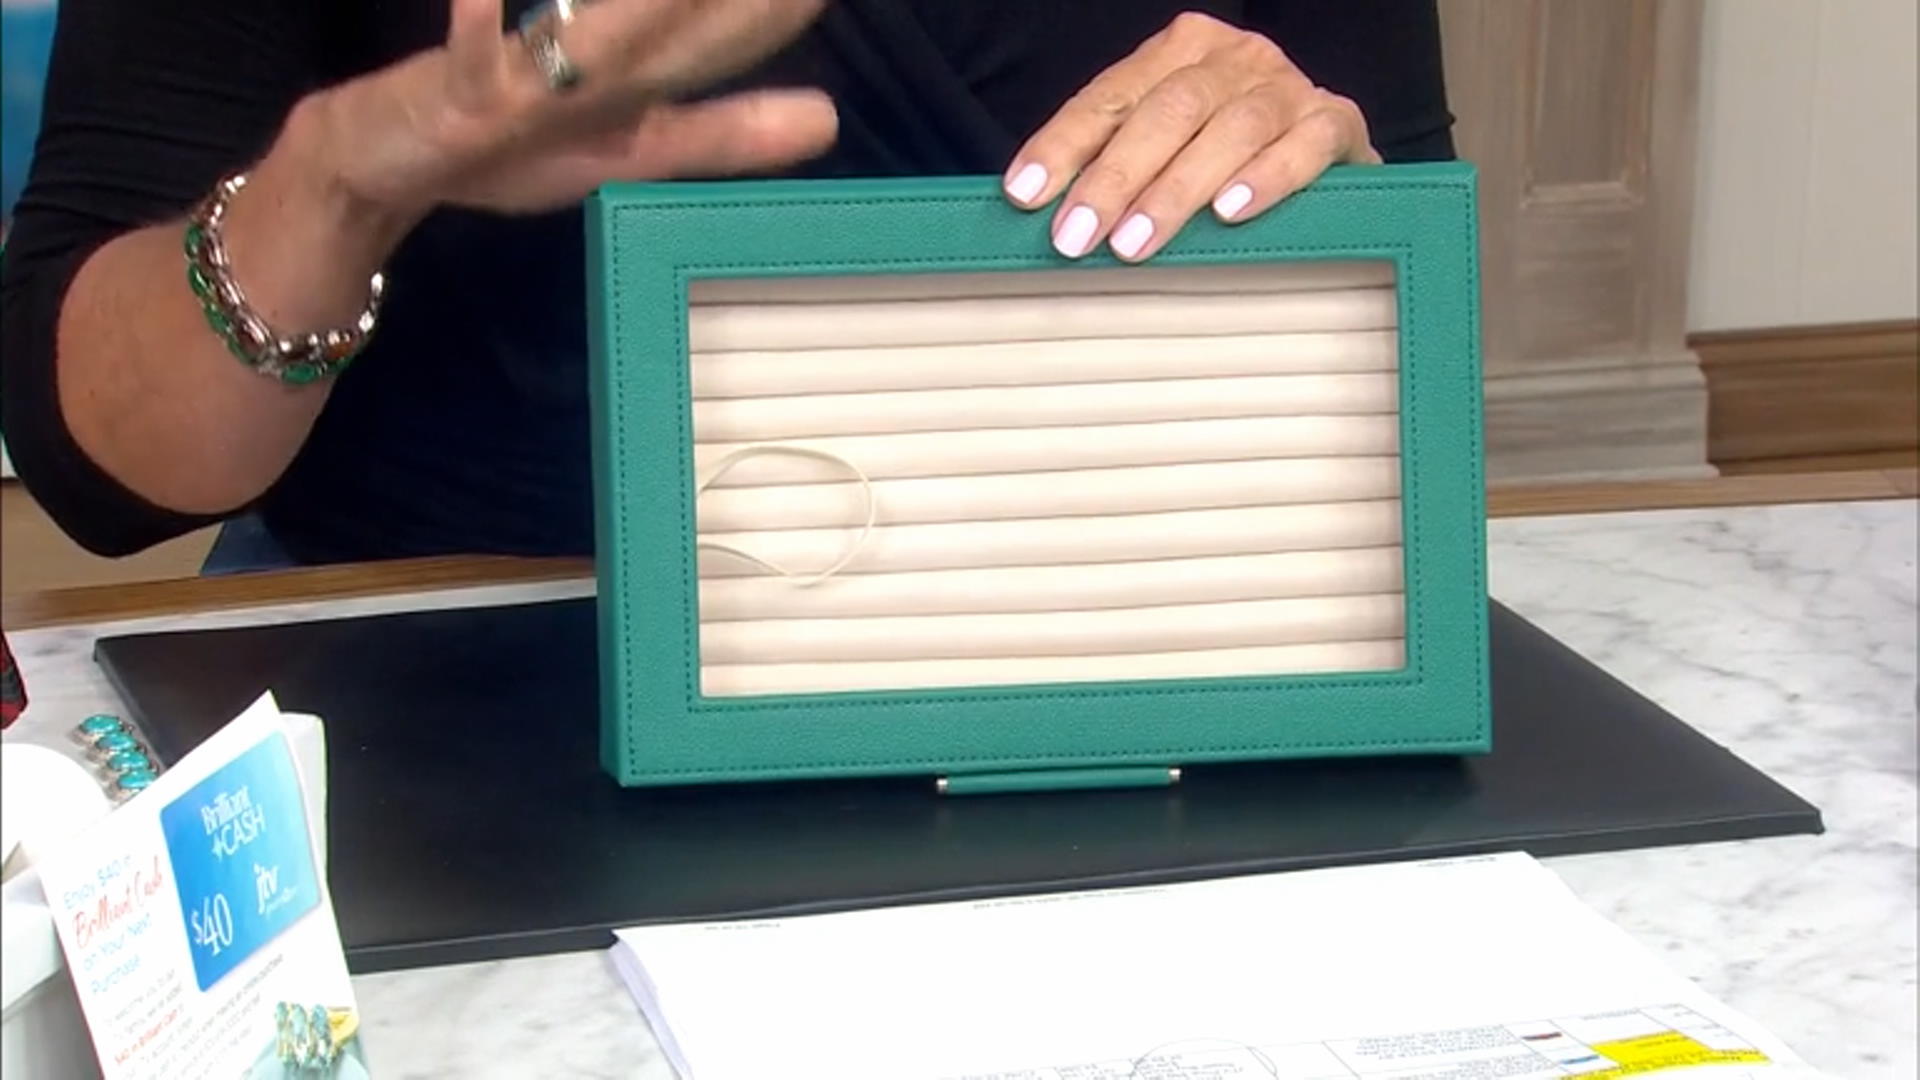 WOLF Medium Ring Box with Window and LusterLoc (TM) in Malachite Green Video Thumbnail